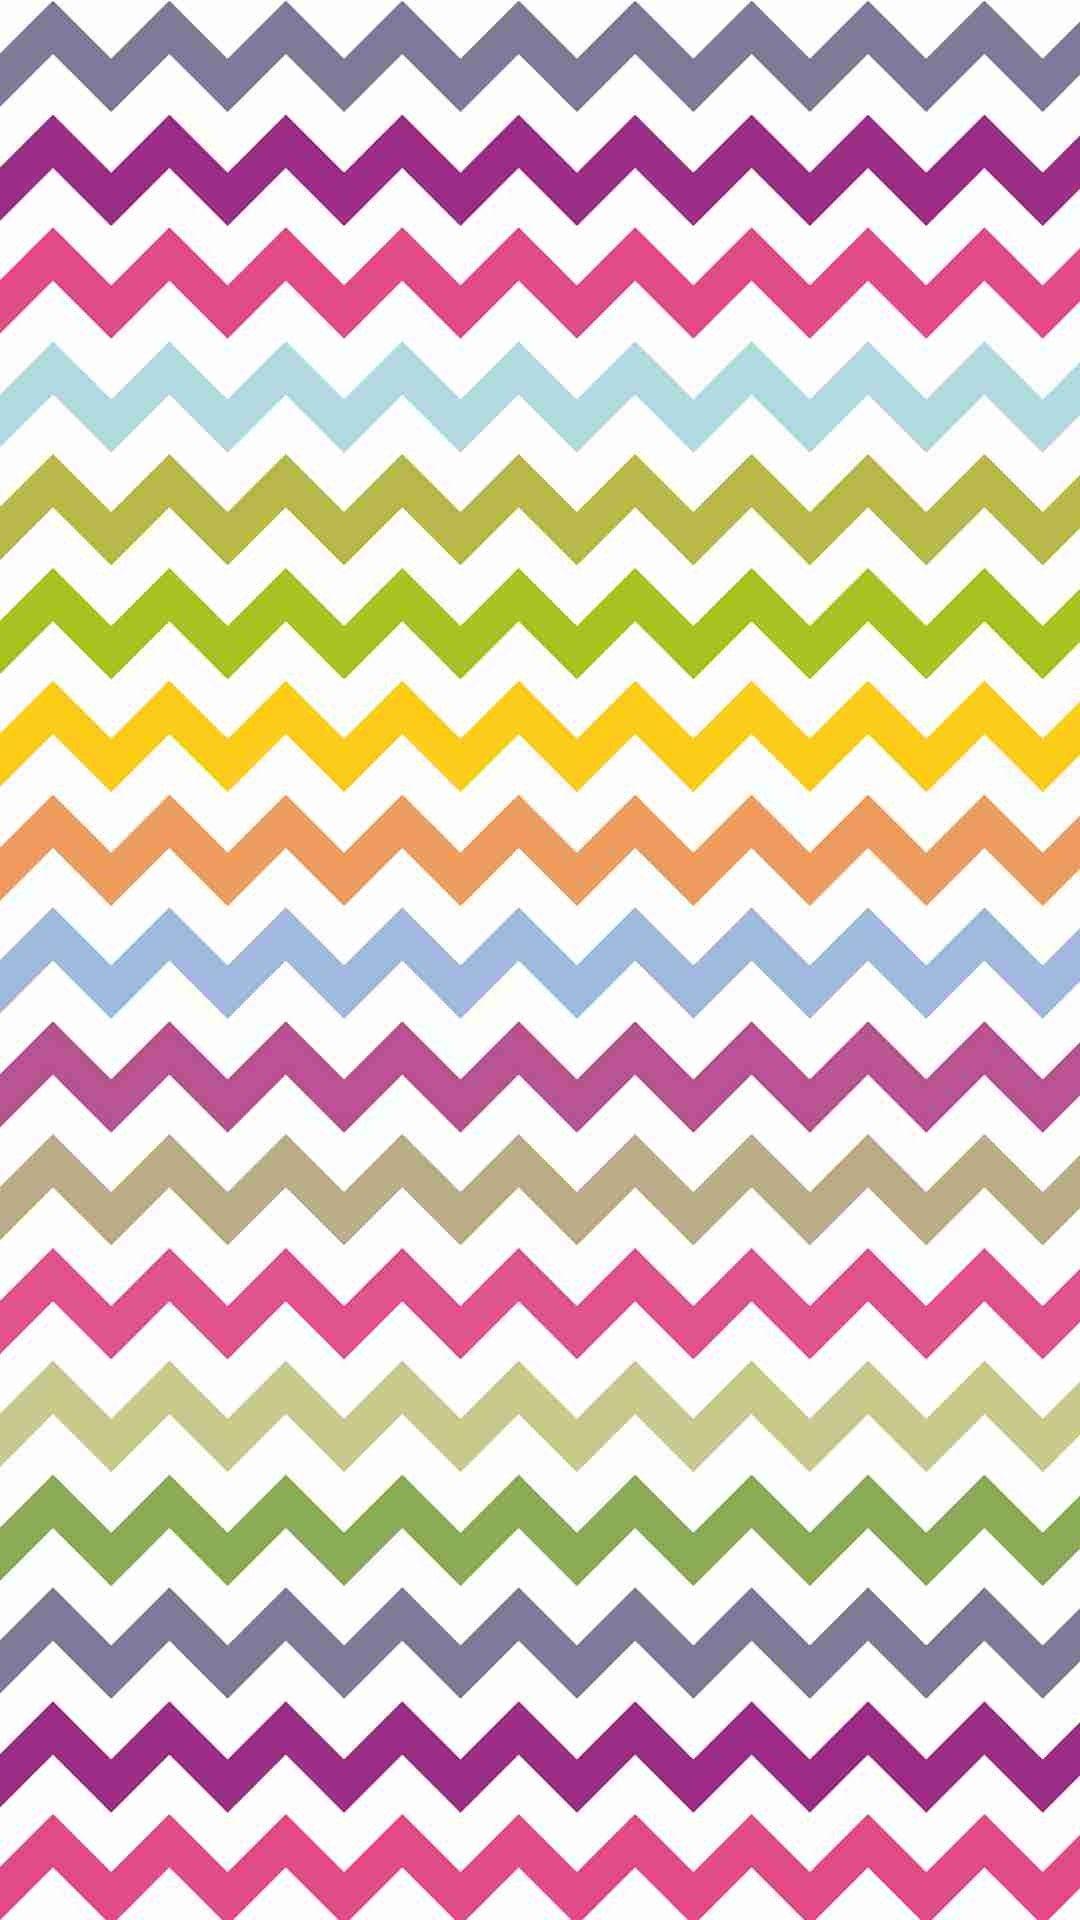 Bright Colors Zigzag and Chevron iPhone 6 Plus Wallpaper